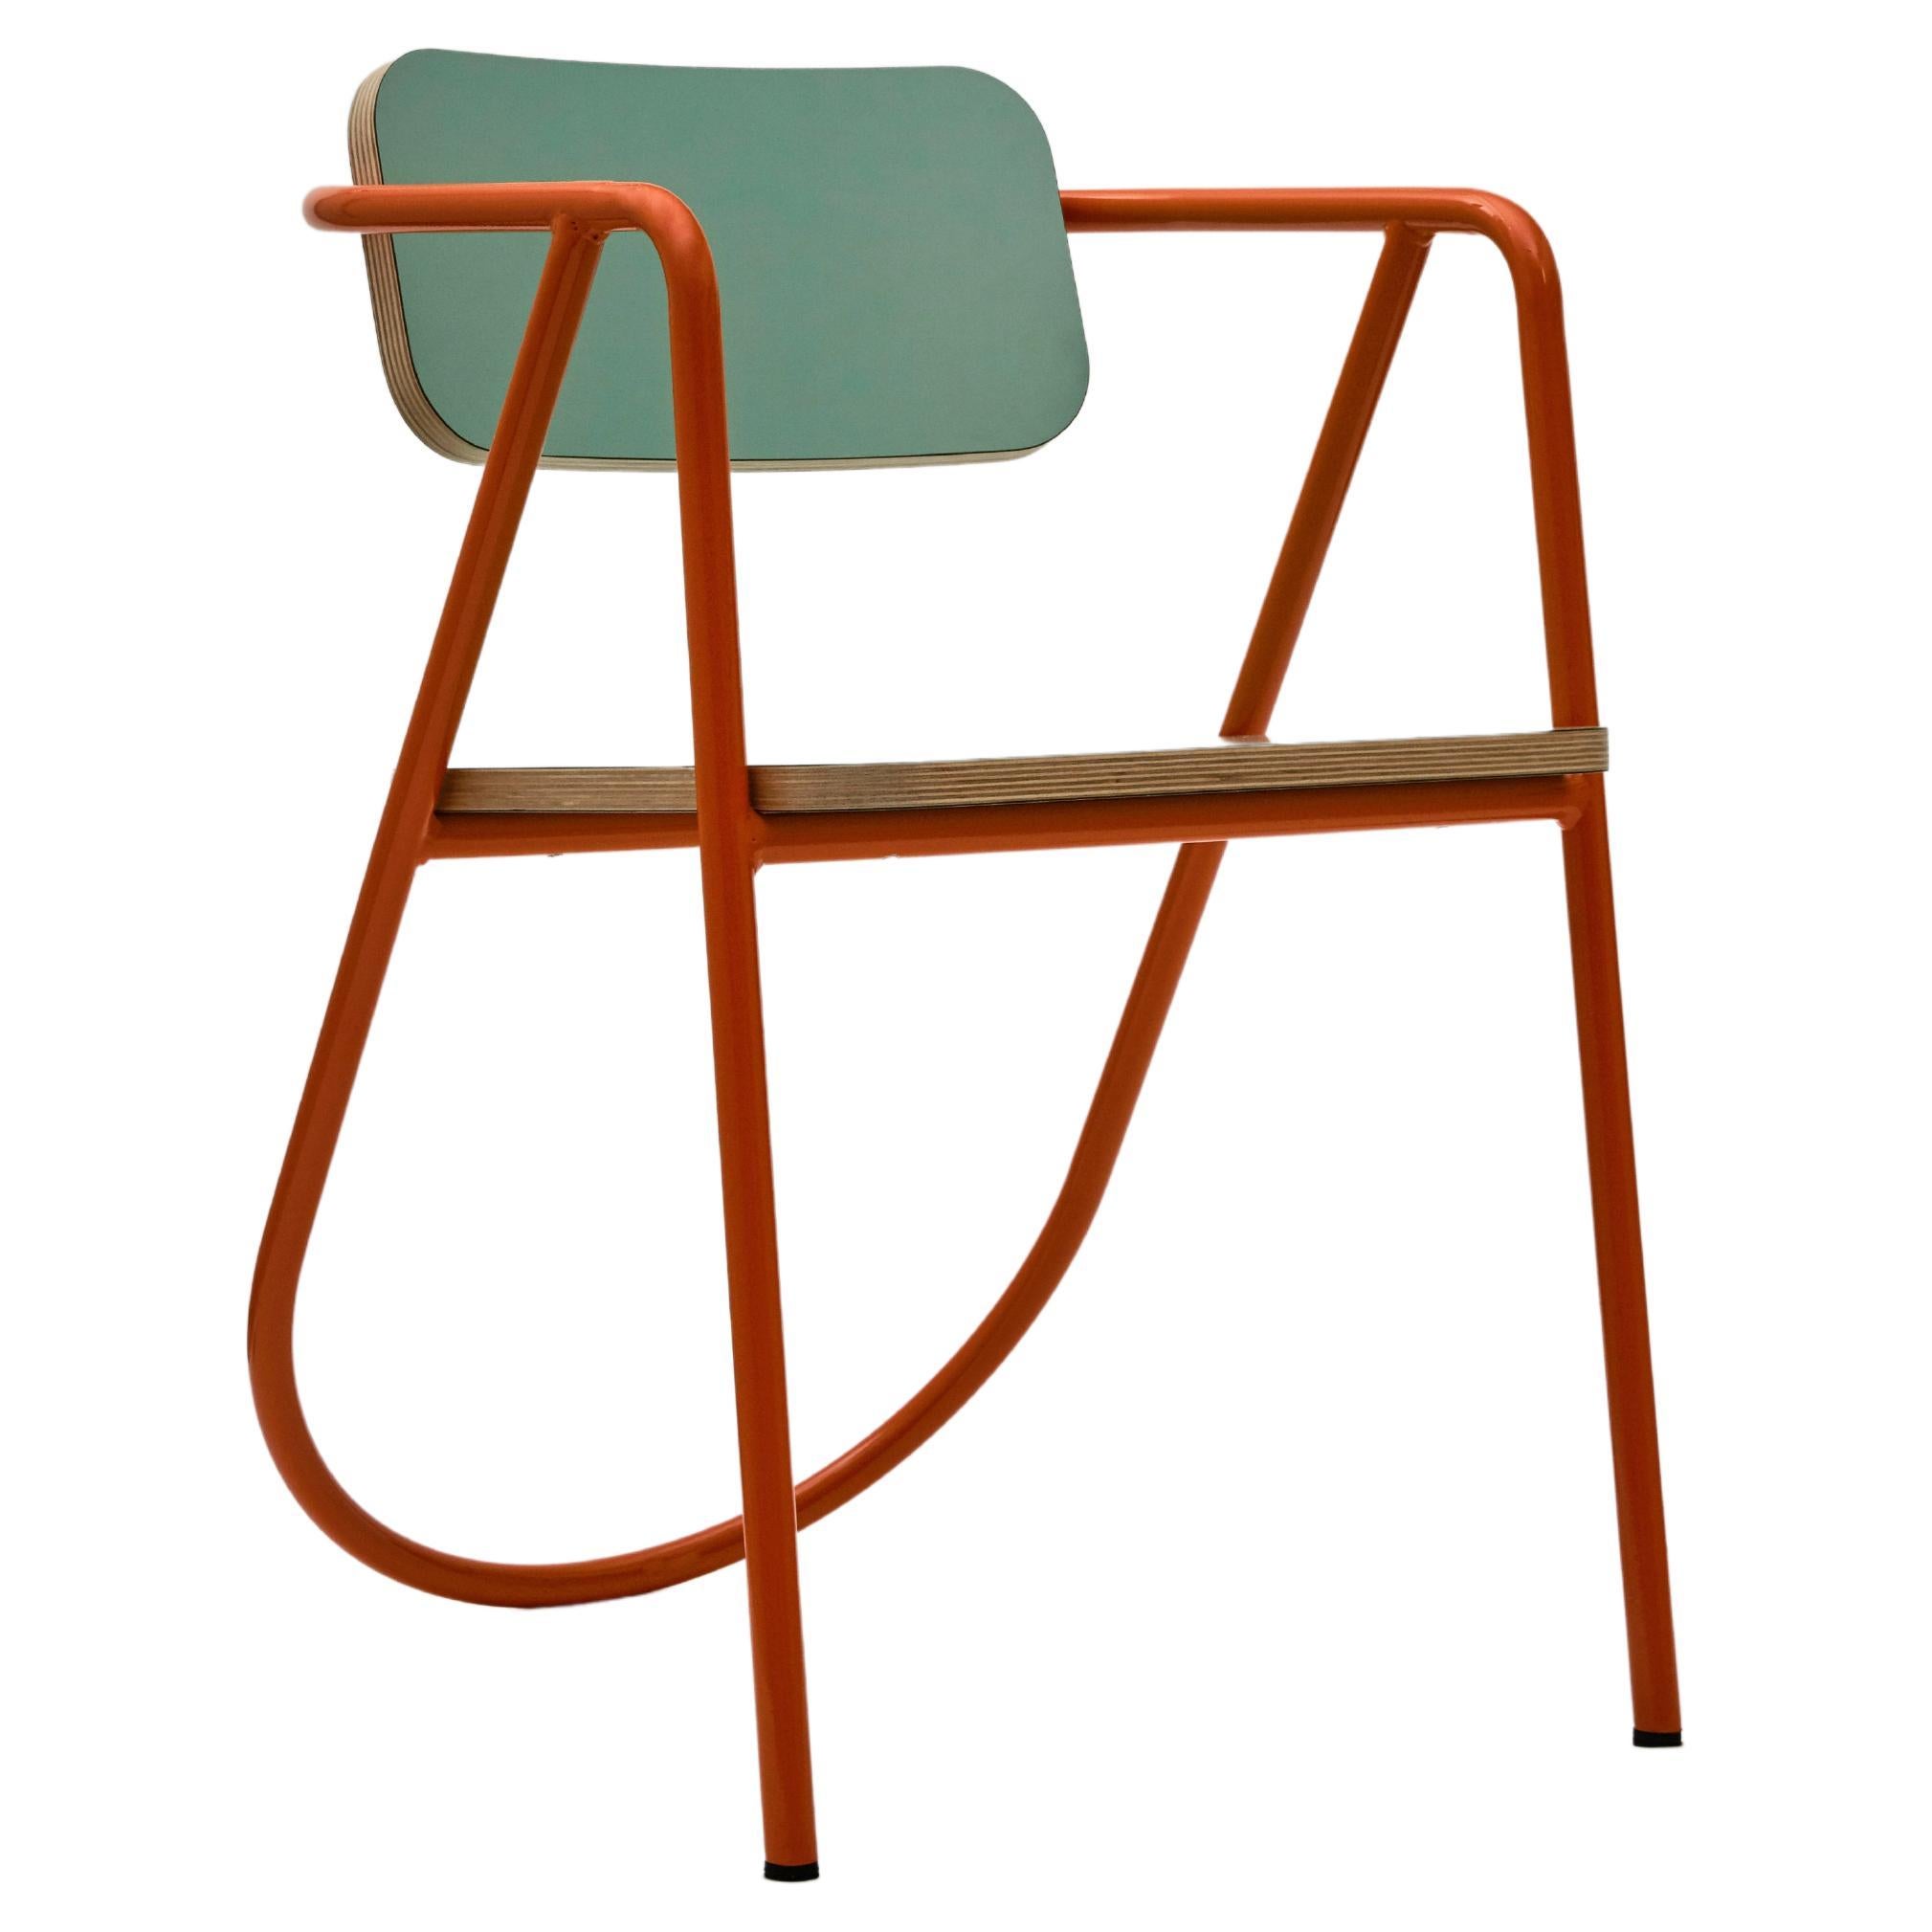 La Misciù Chair, Teal and Orange For Sale